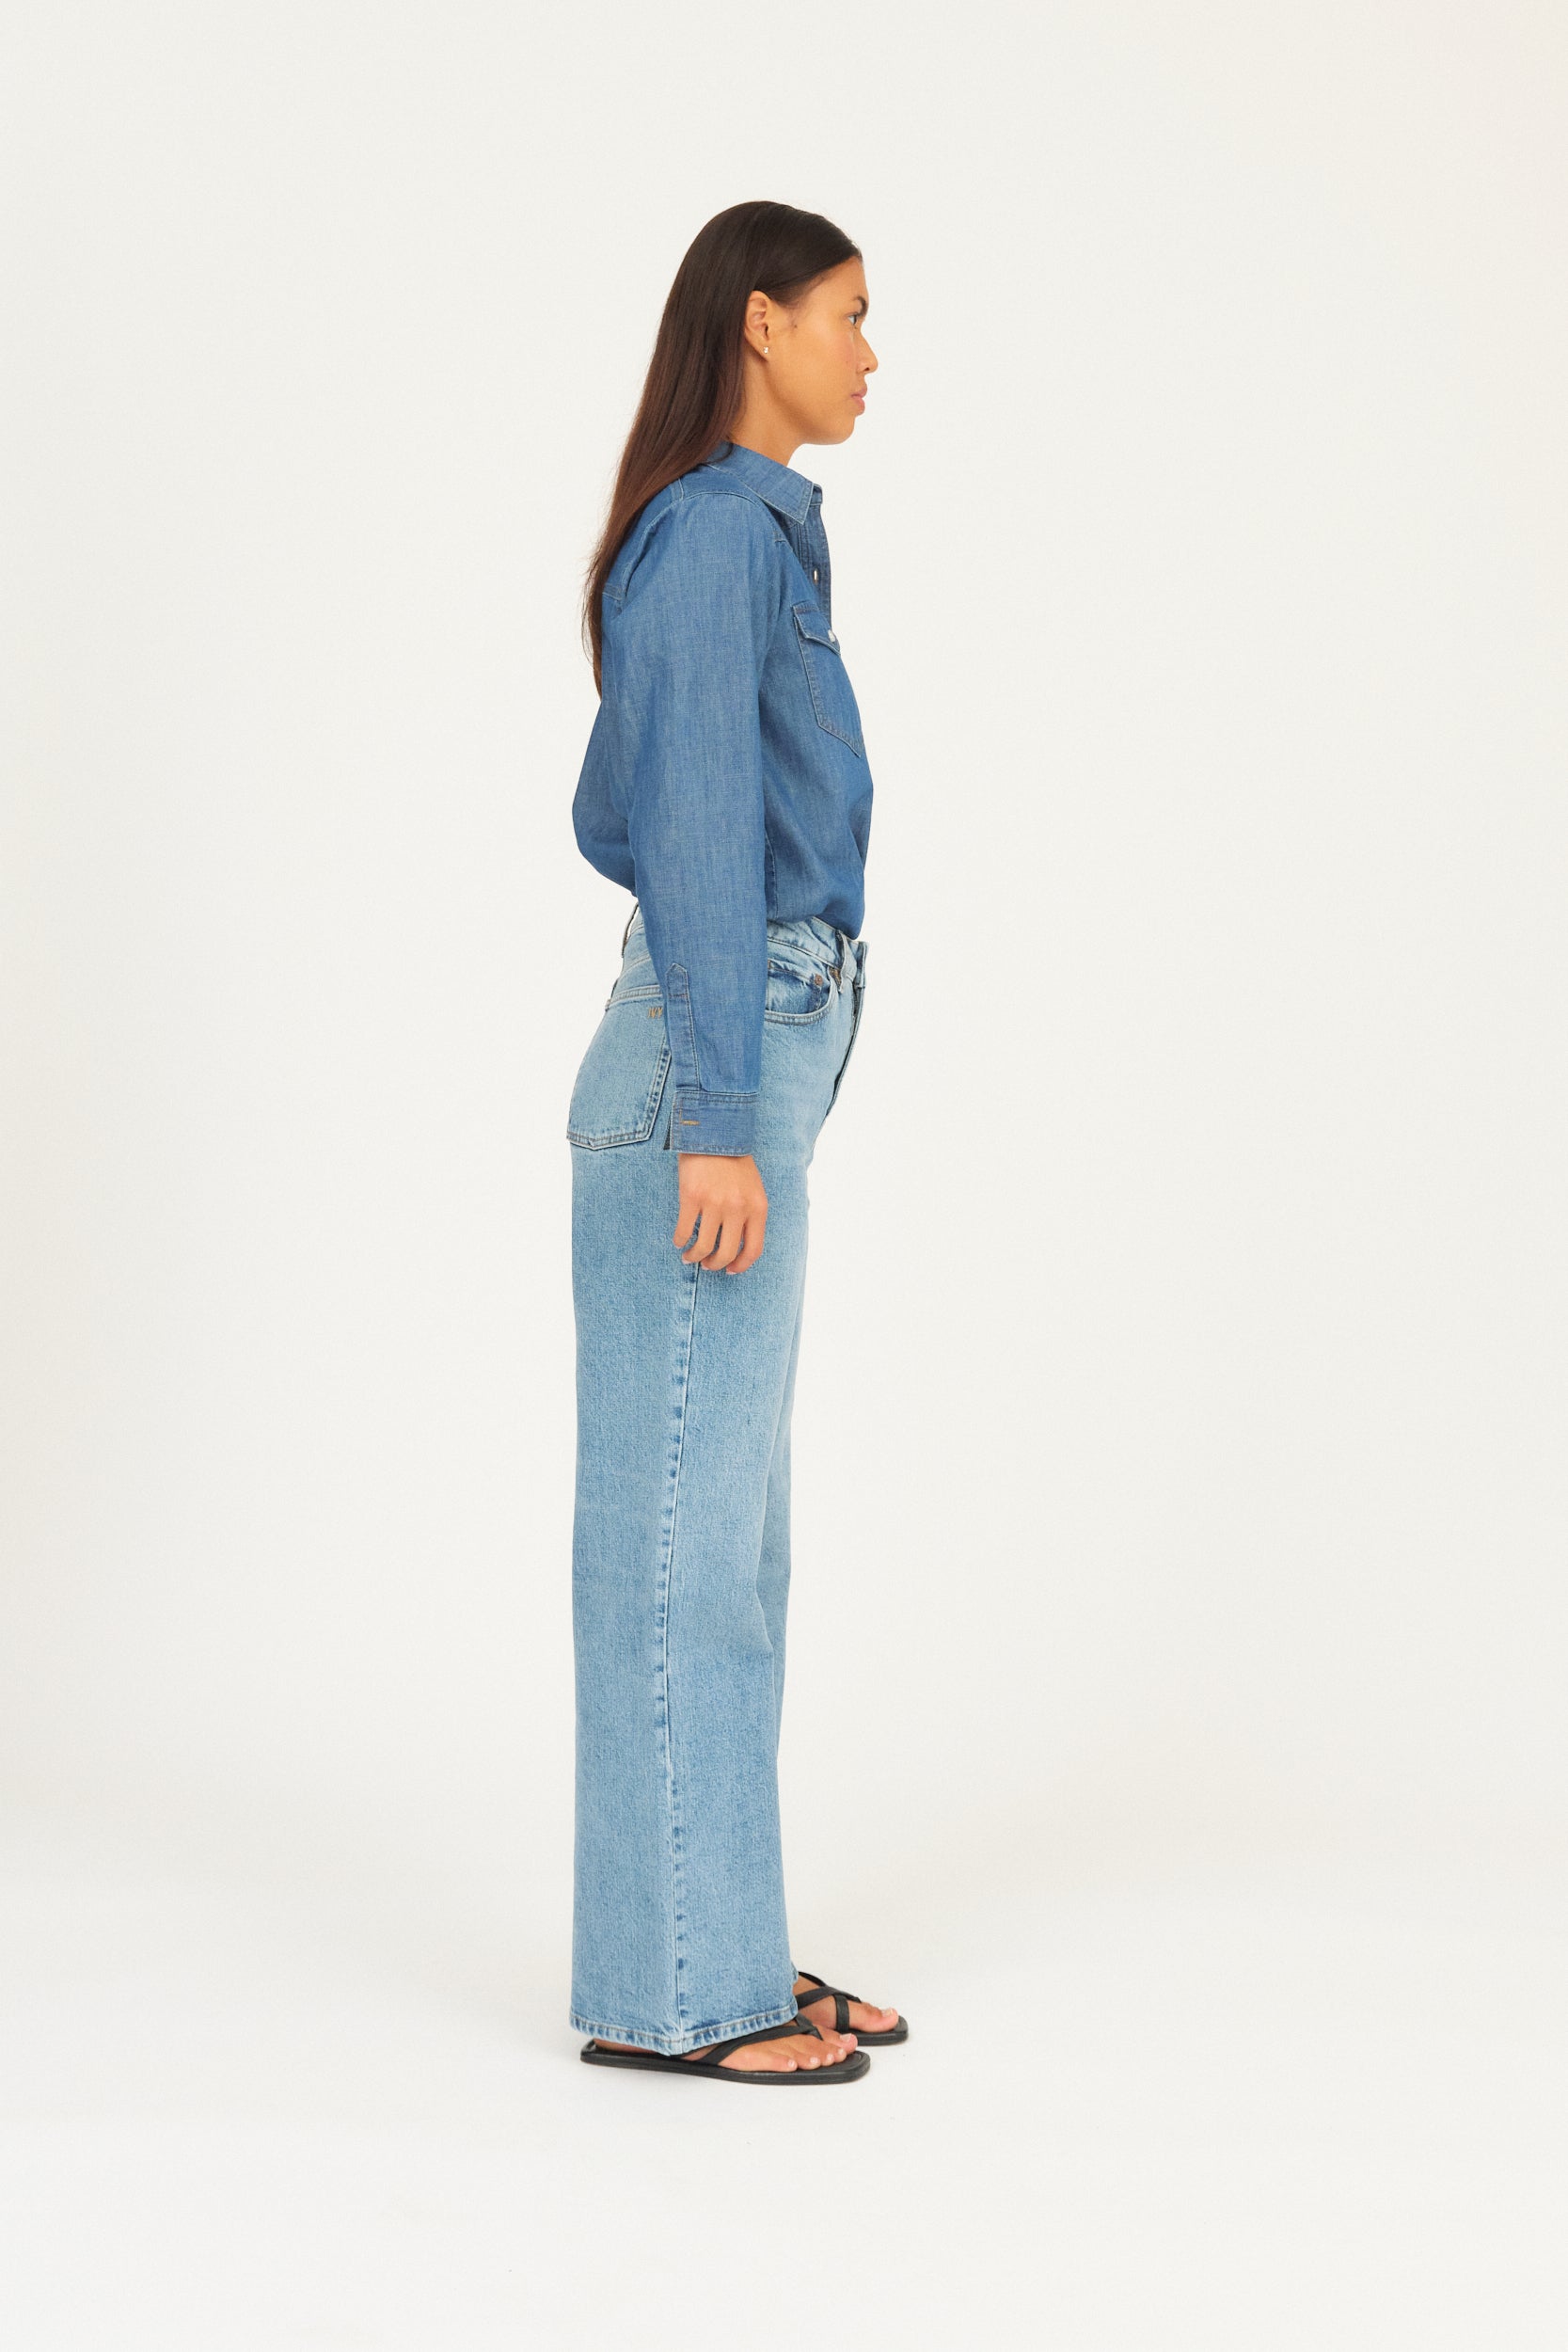 IVY Copenhagen IVY-Brooke Jeans Wash Portofino Jeans & Pants 51 Denim Blue